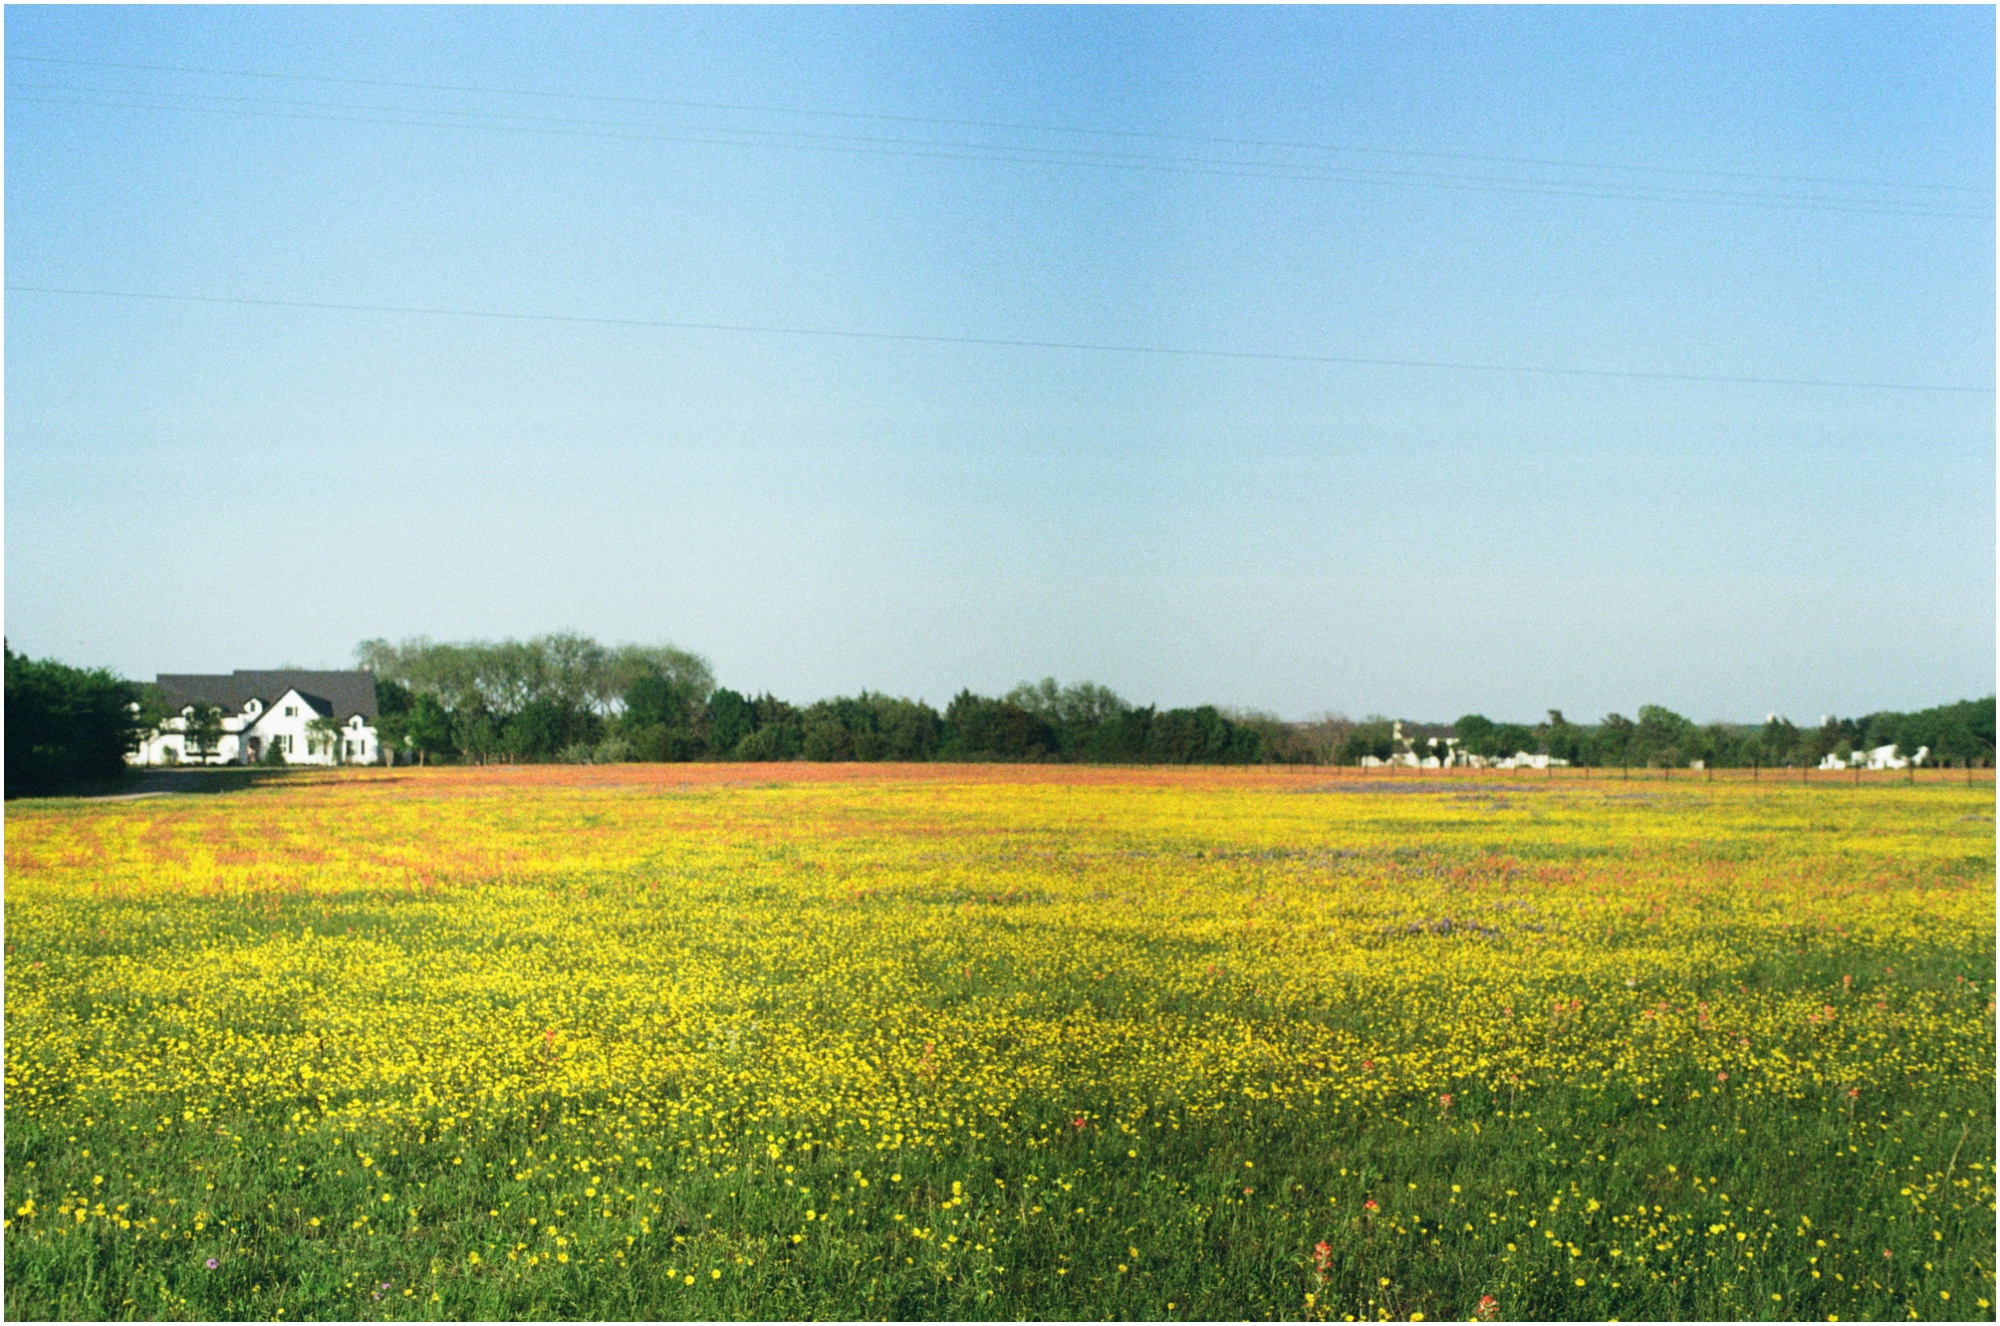 flower field in the summer on 120mm film